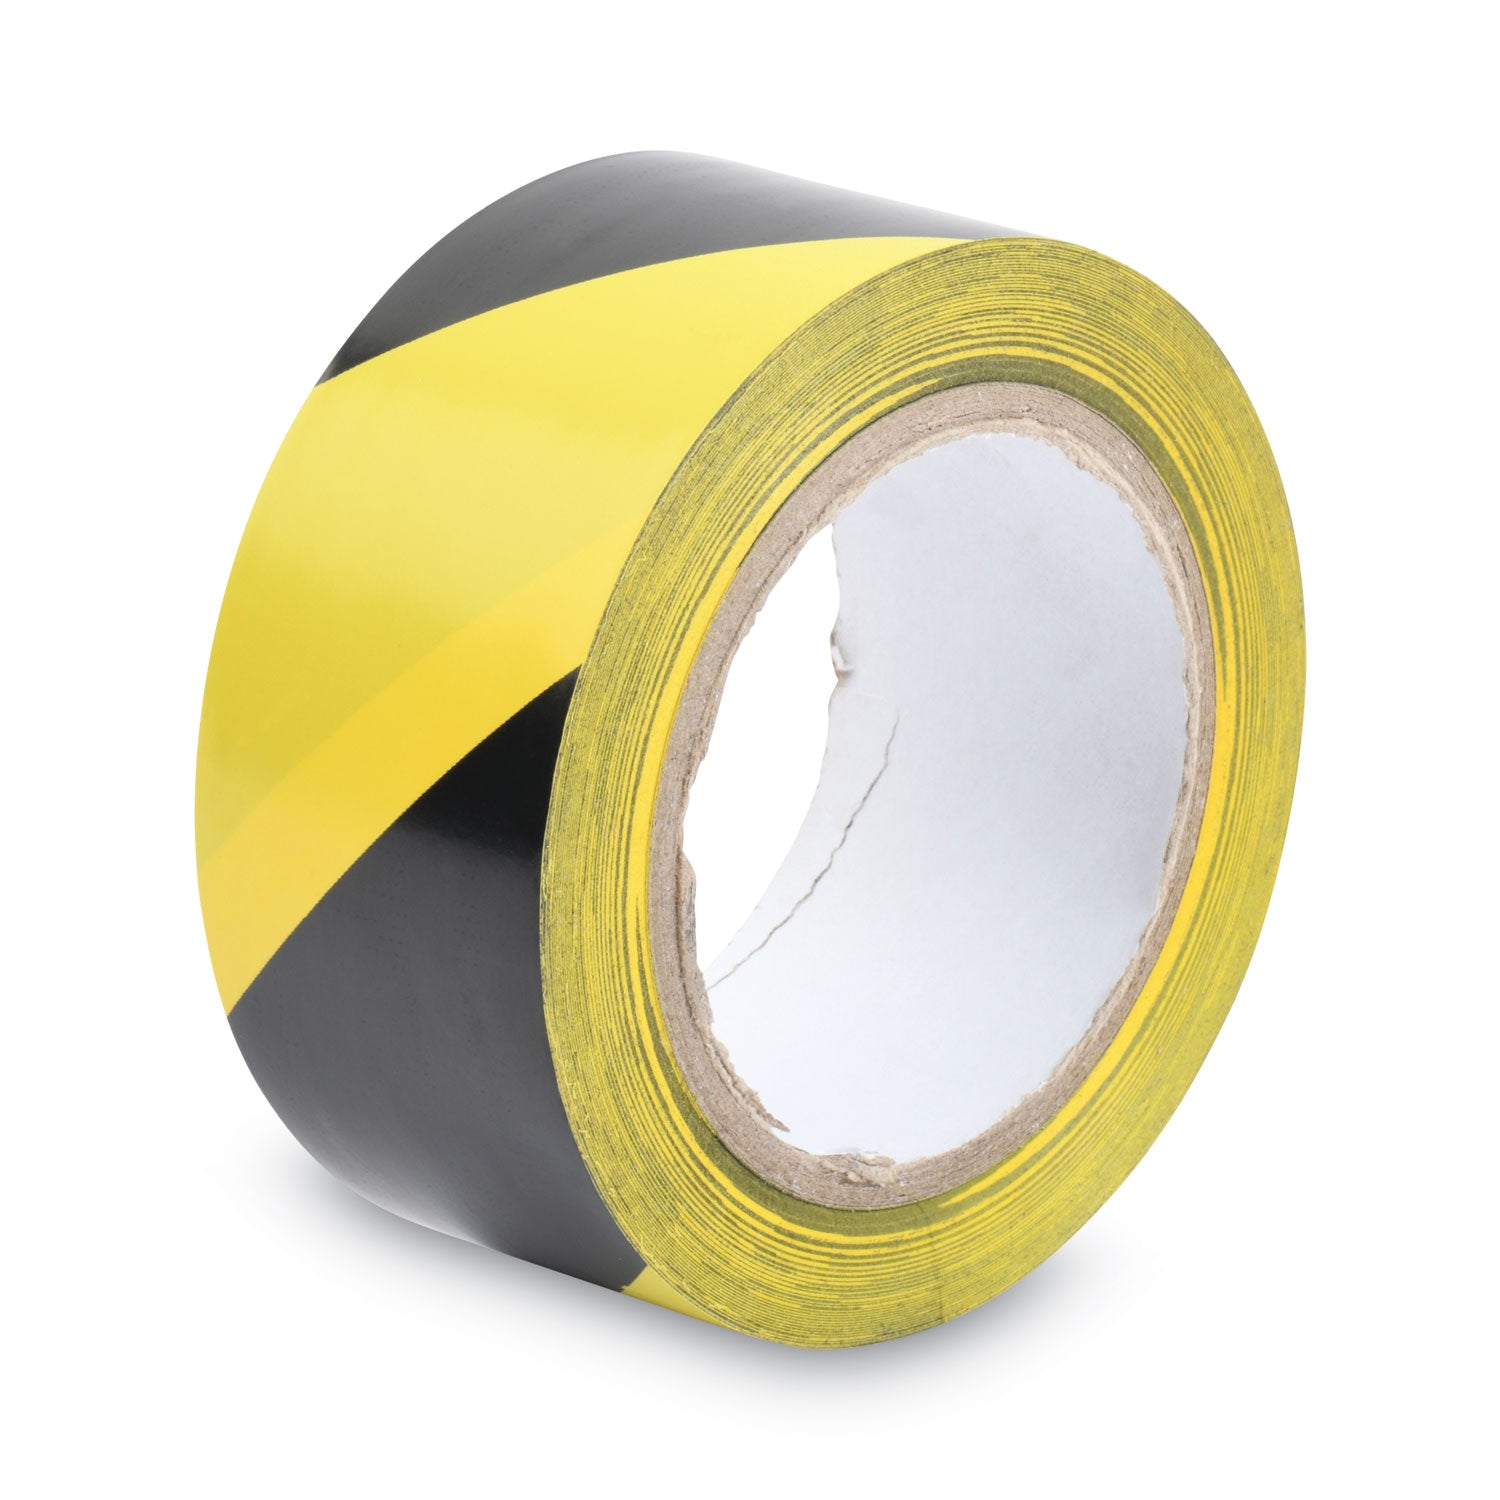 Hazard Marking Aisle Tape, 2" x 108 ft, Black/Yellow - 